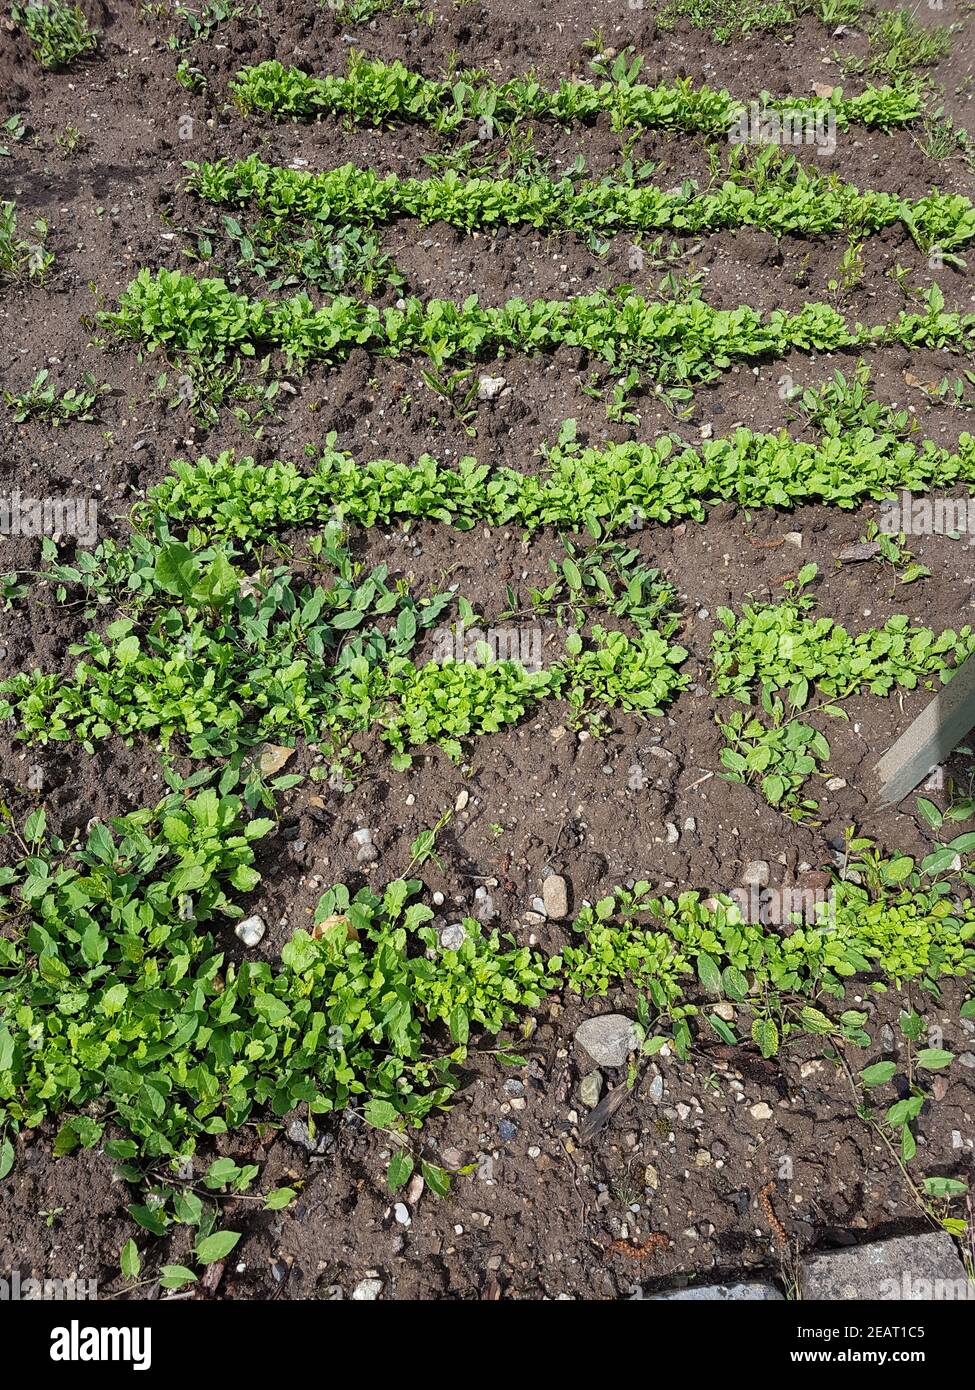 Saatreihen, Saat, Aussaat, aussaehen, Gartenkresse  Lepidium Sativum Stock Photo